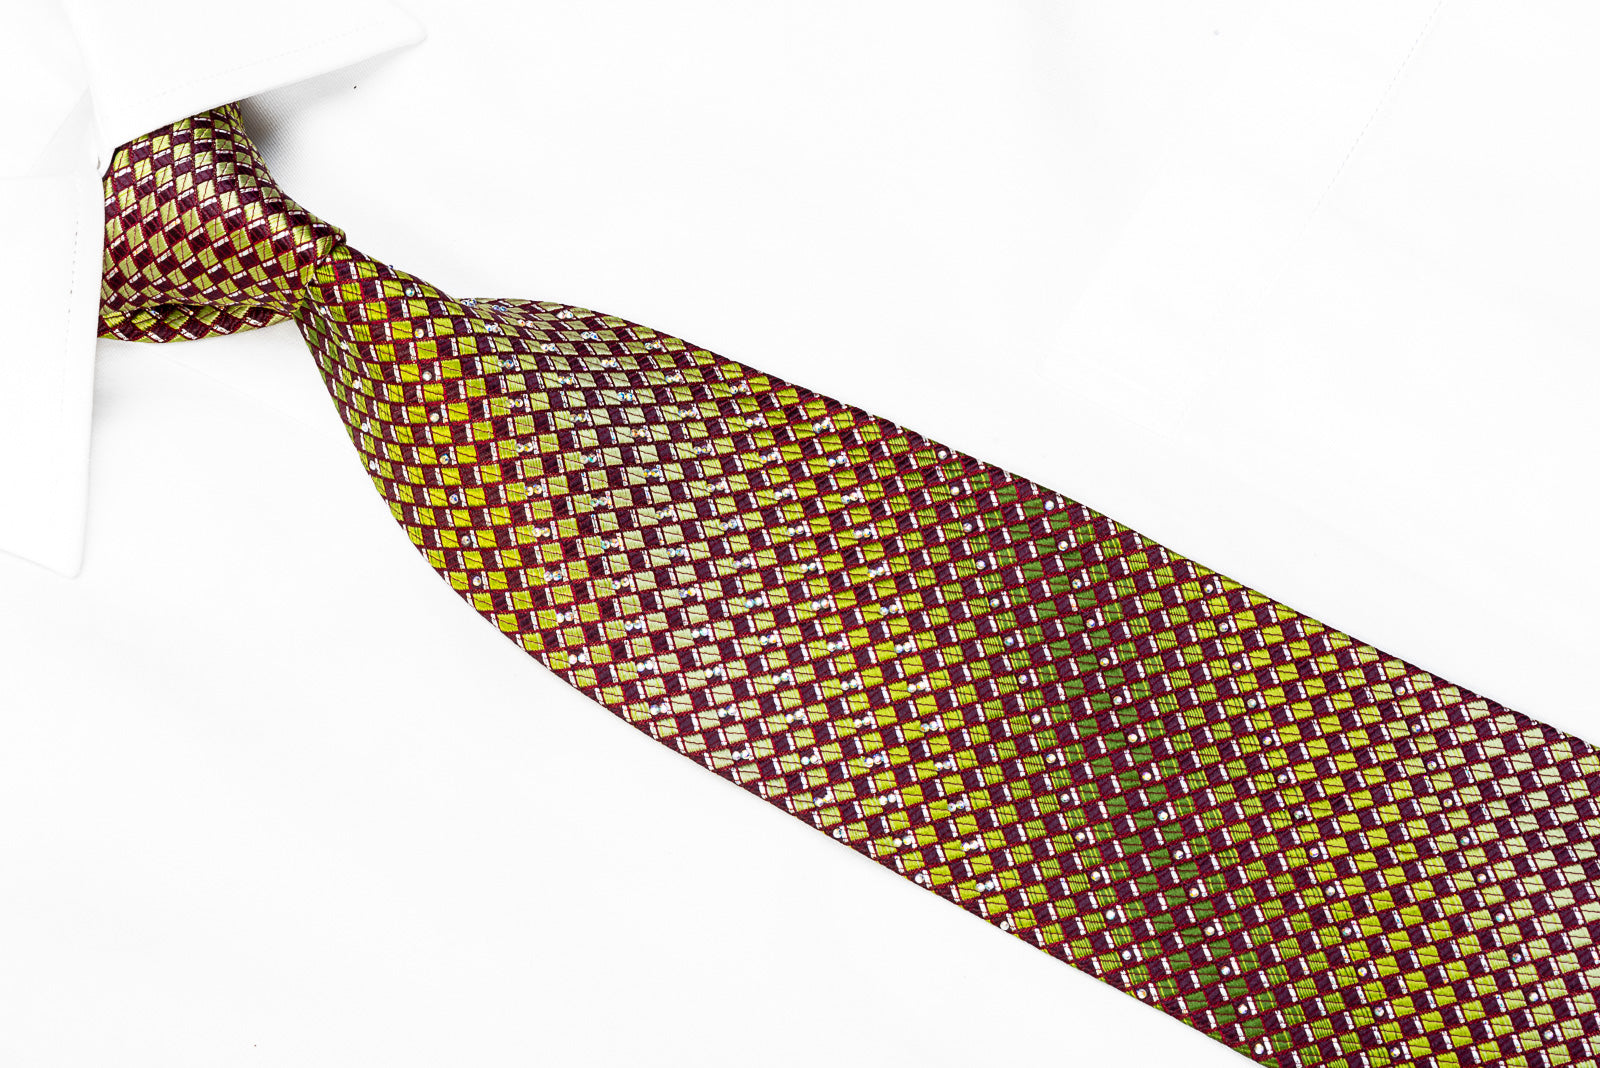 Men's Rhinestone Silk Necktie Green Geometric On Burgundy With Sparkles